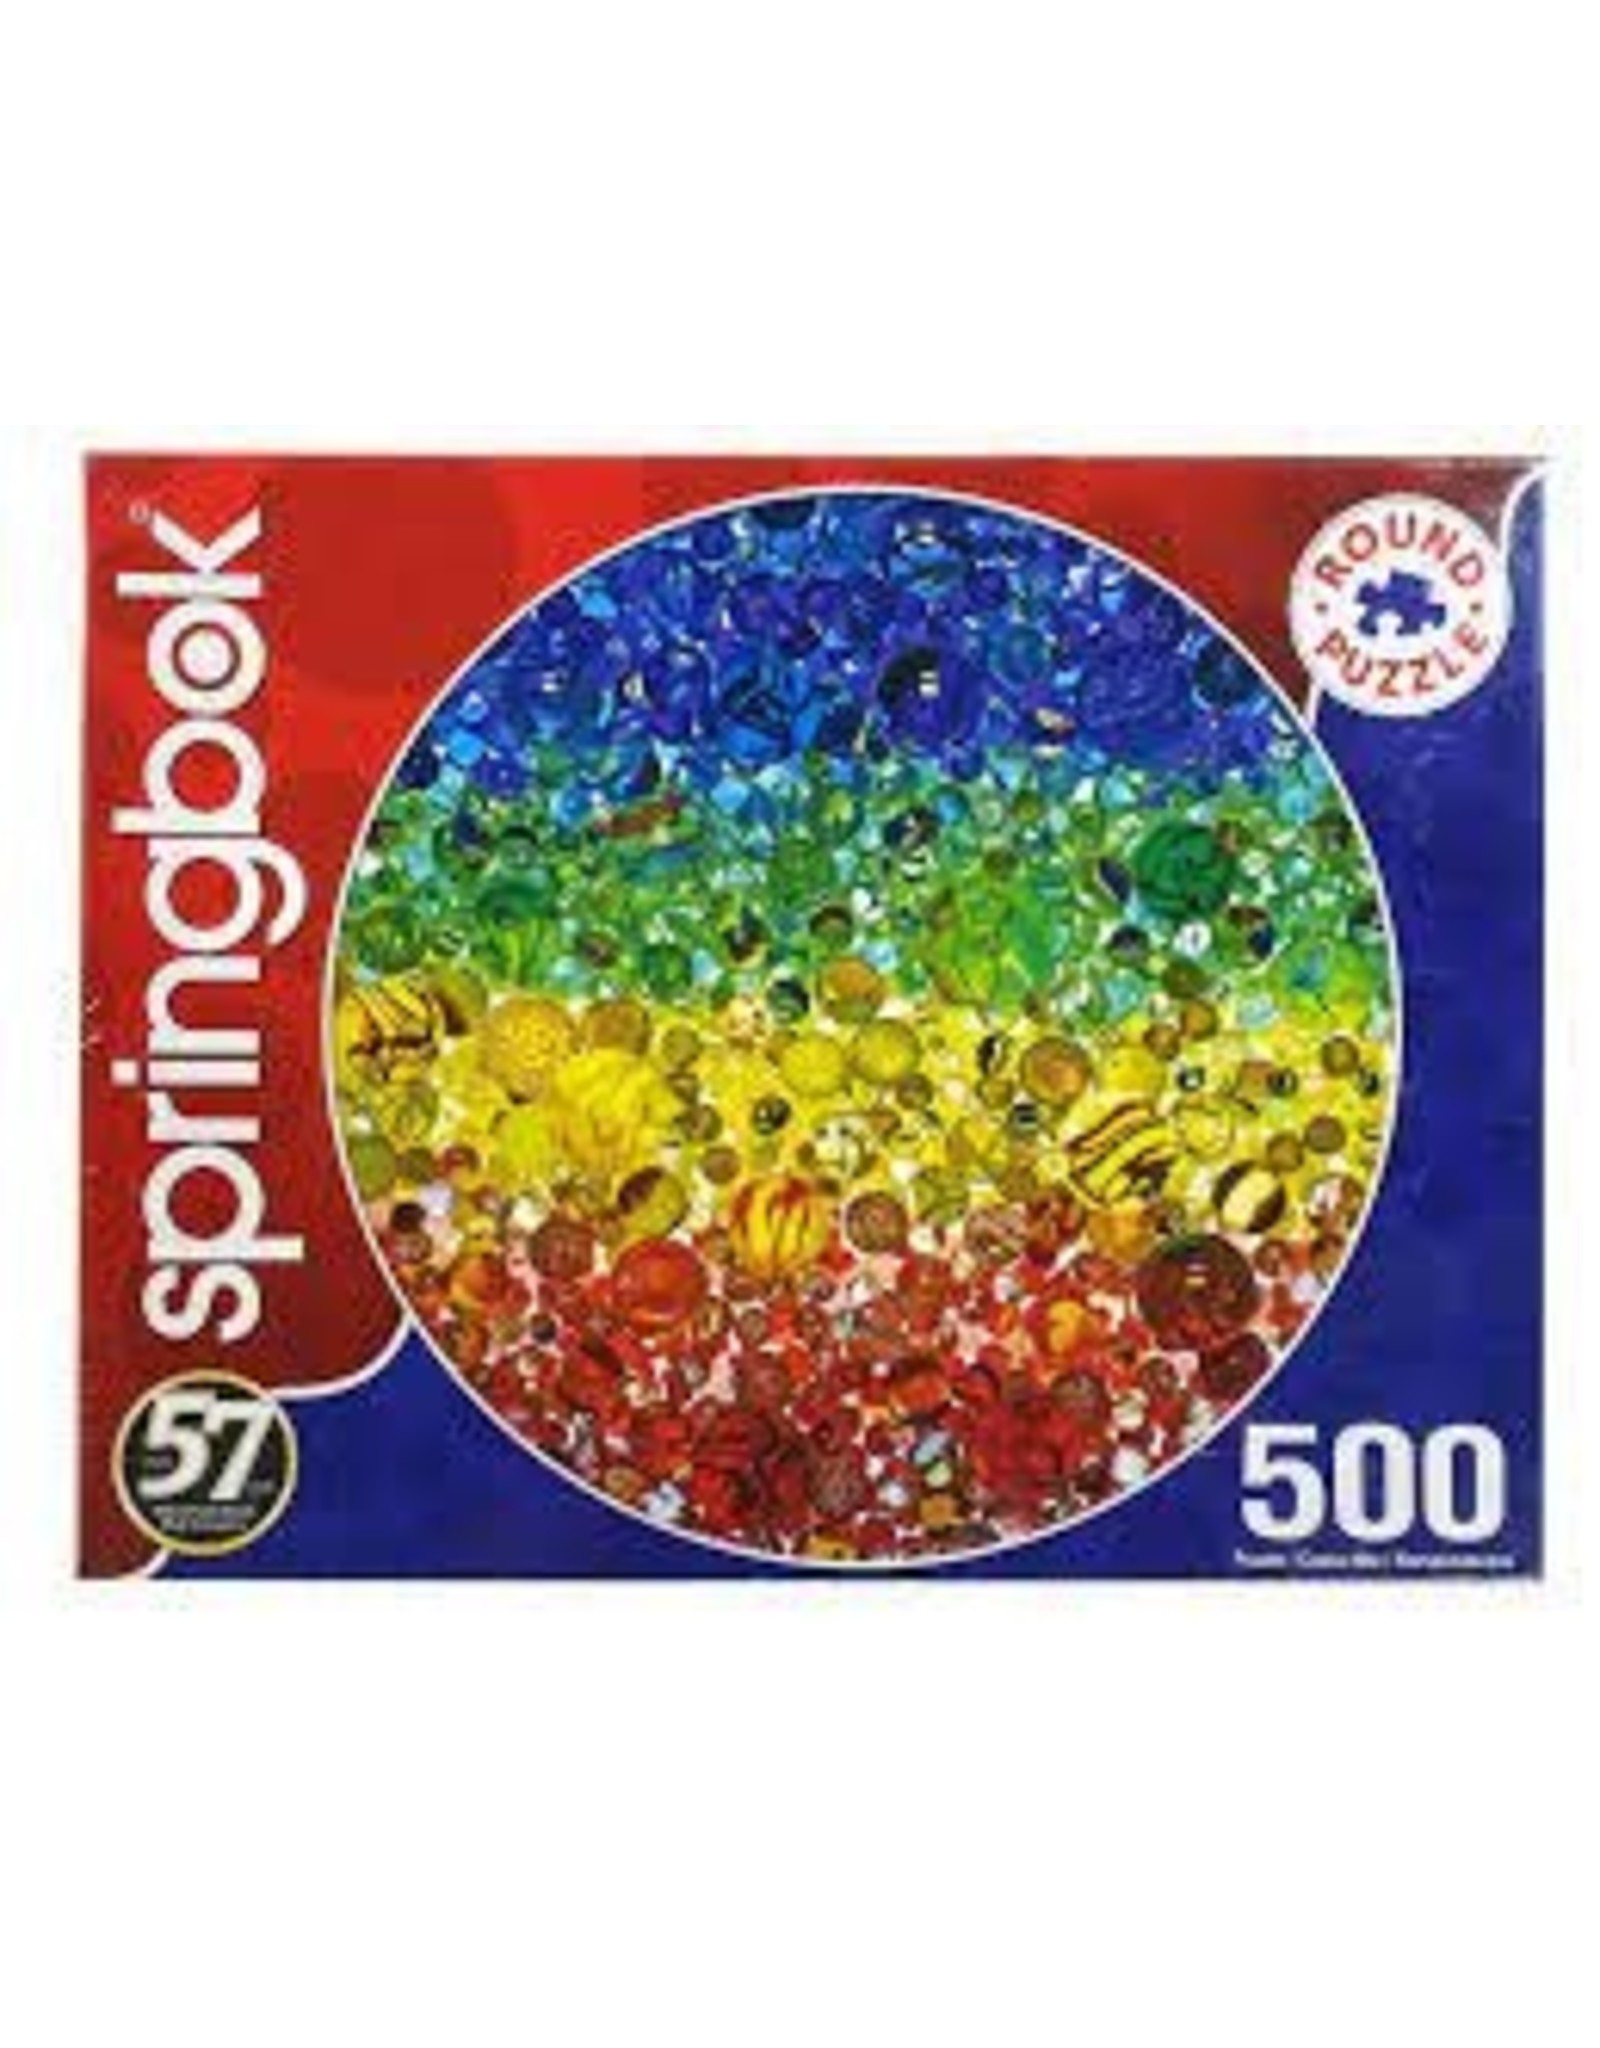 Illuminated Marbles 500 pc